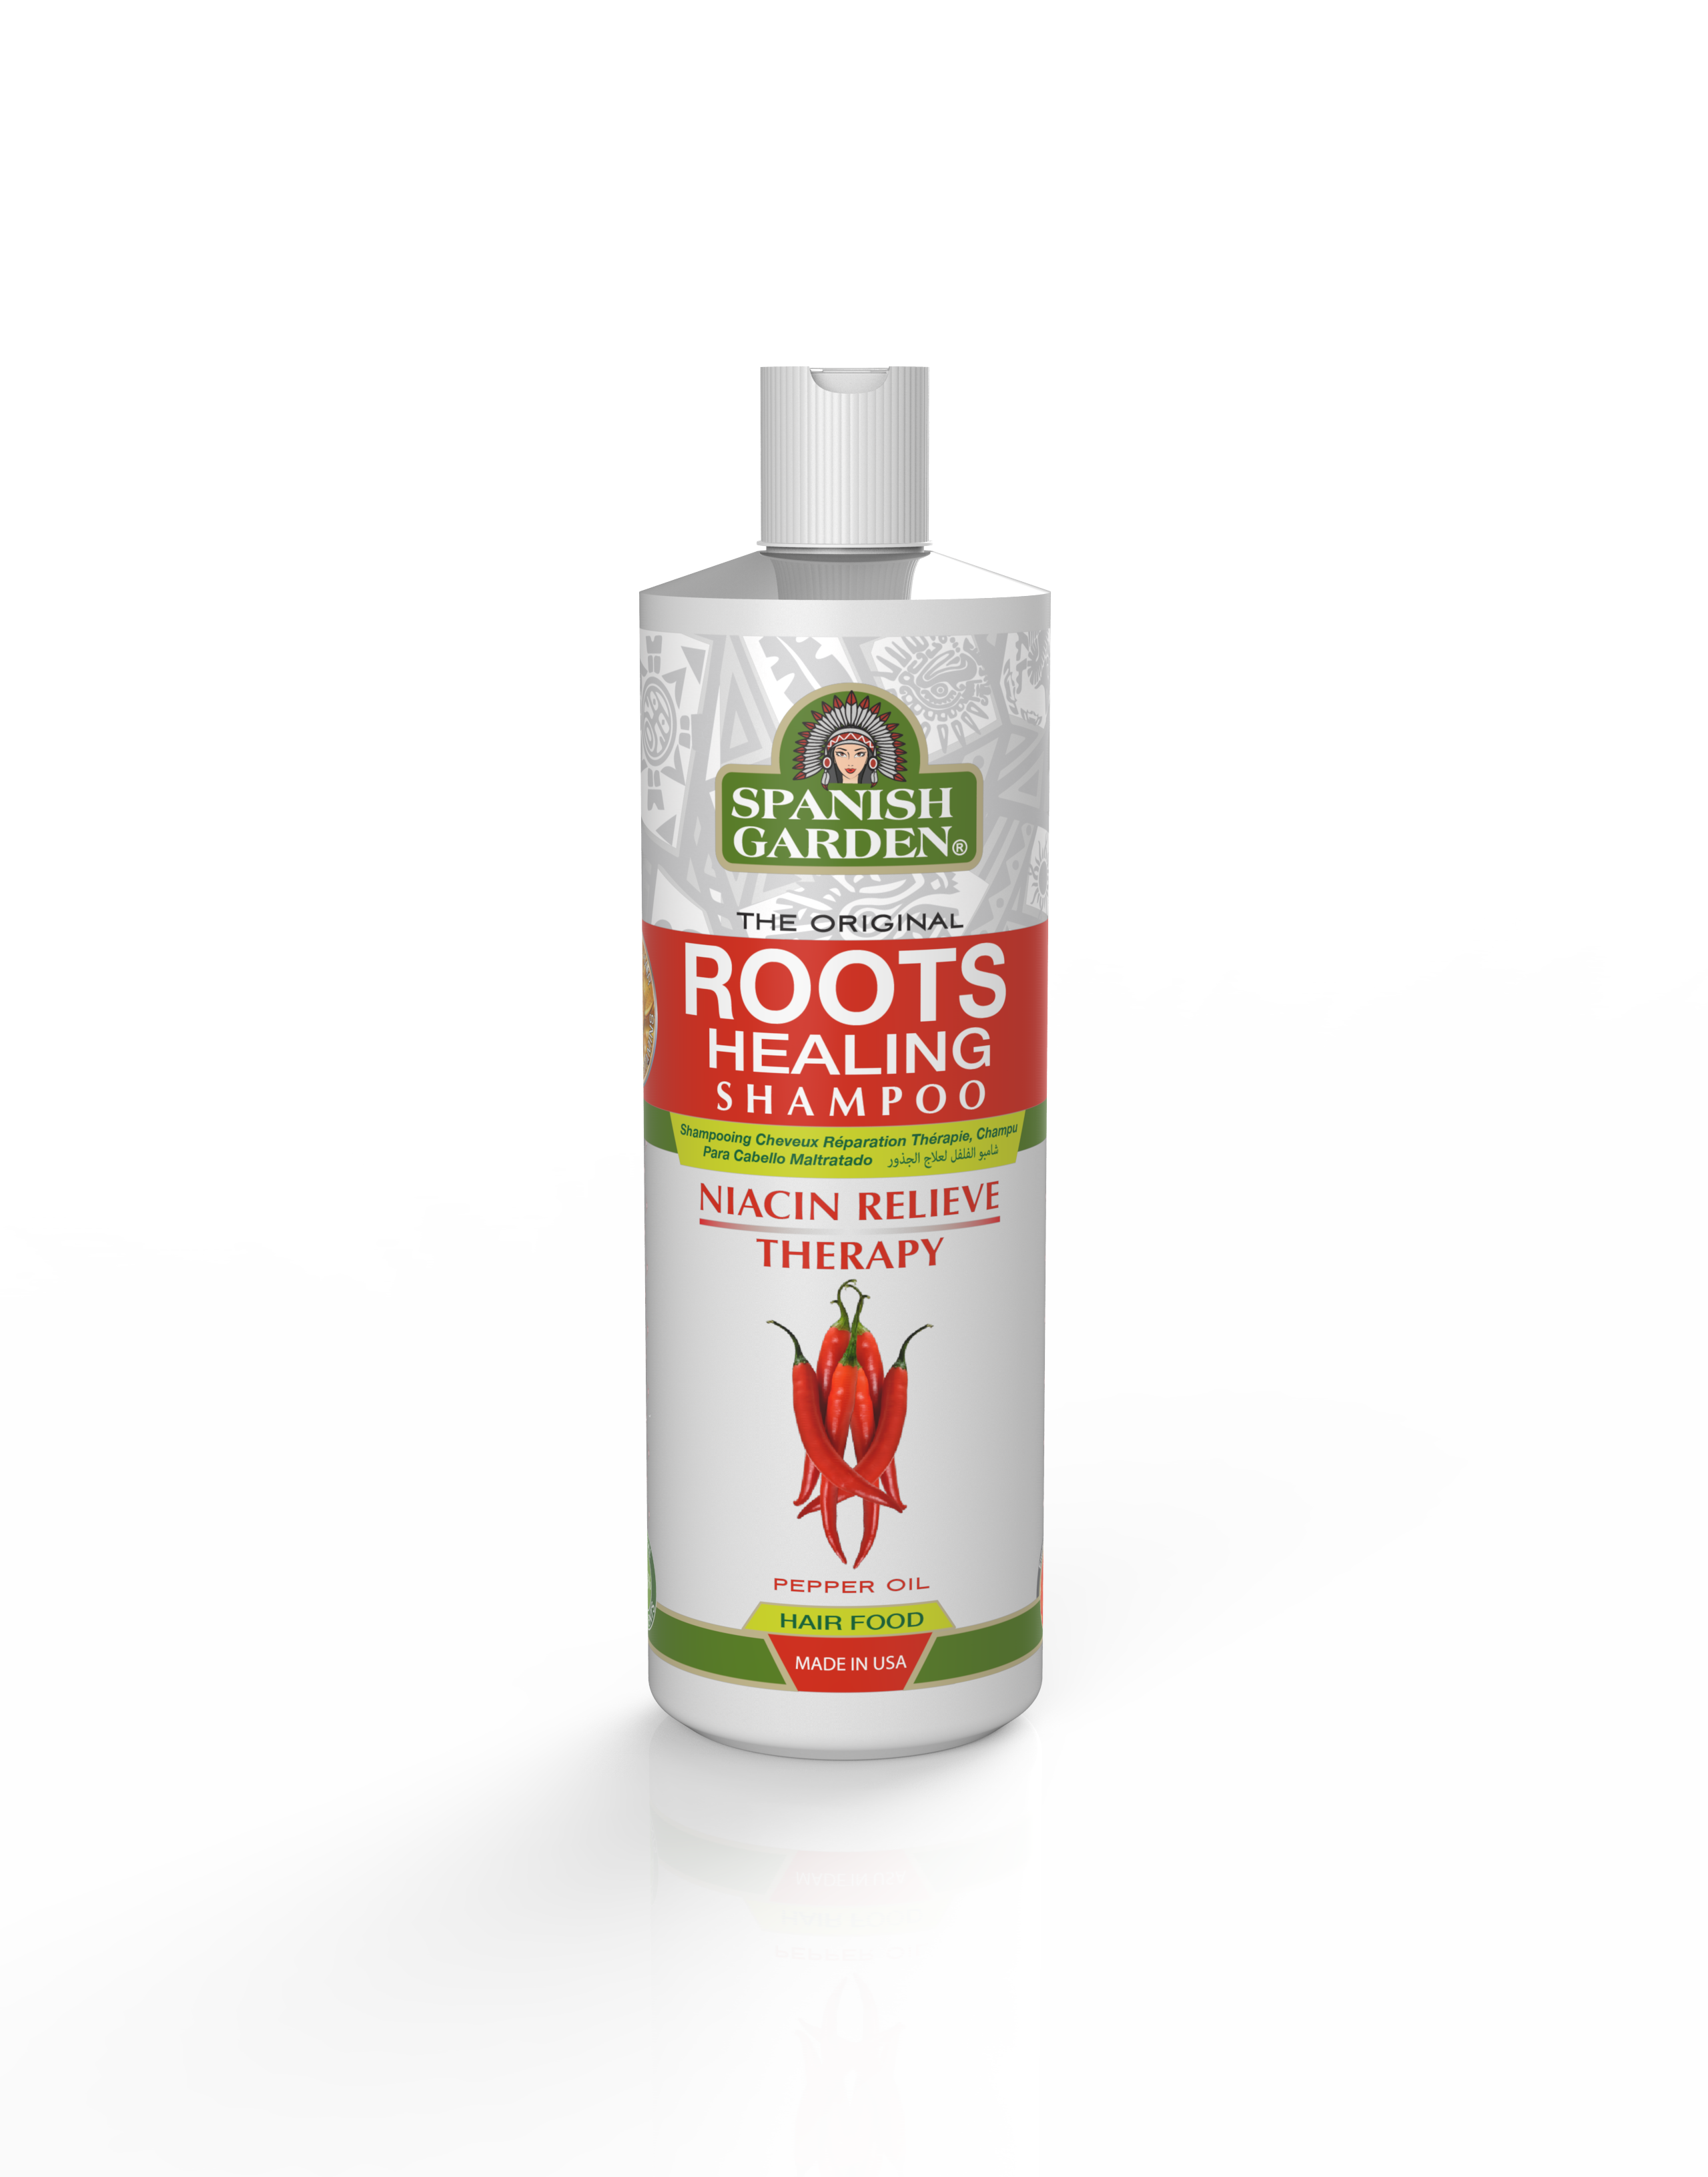 New bottle Shampoo-Roots healing New